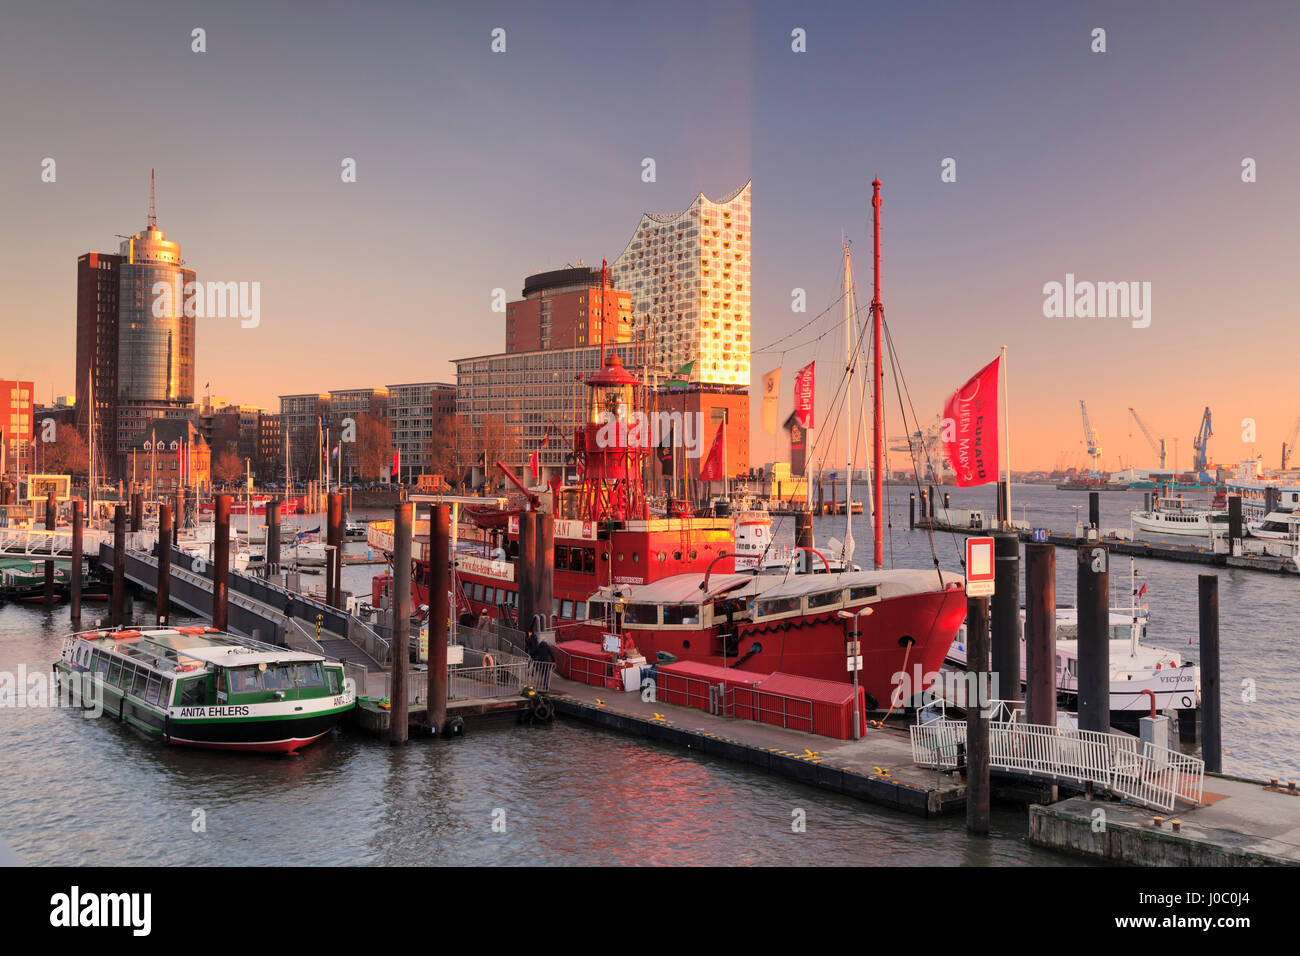 Elbphilharmonie al tramonto, Elbufer, HafenCity di Amburgo, città anseatica, Germania Foto Stock